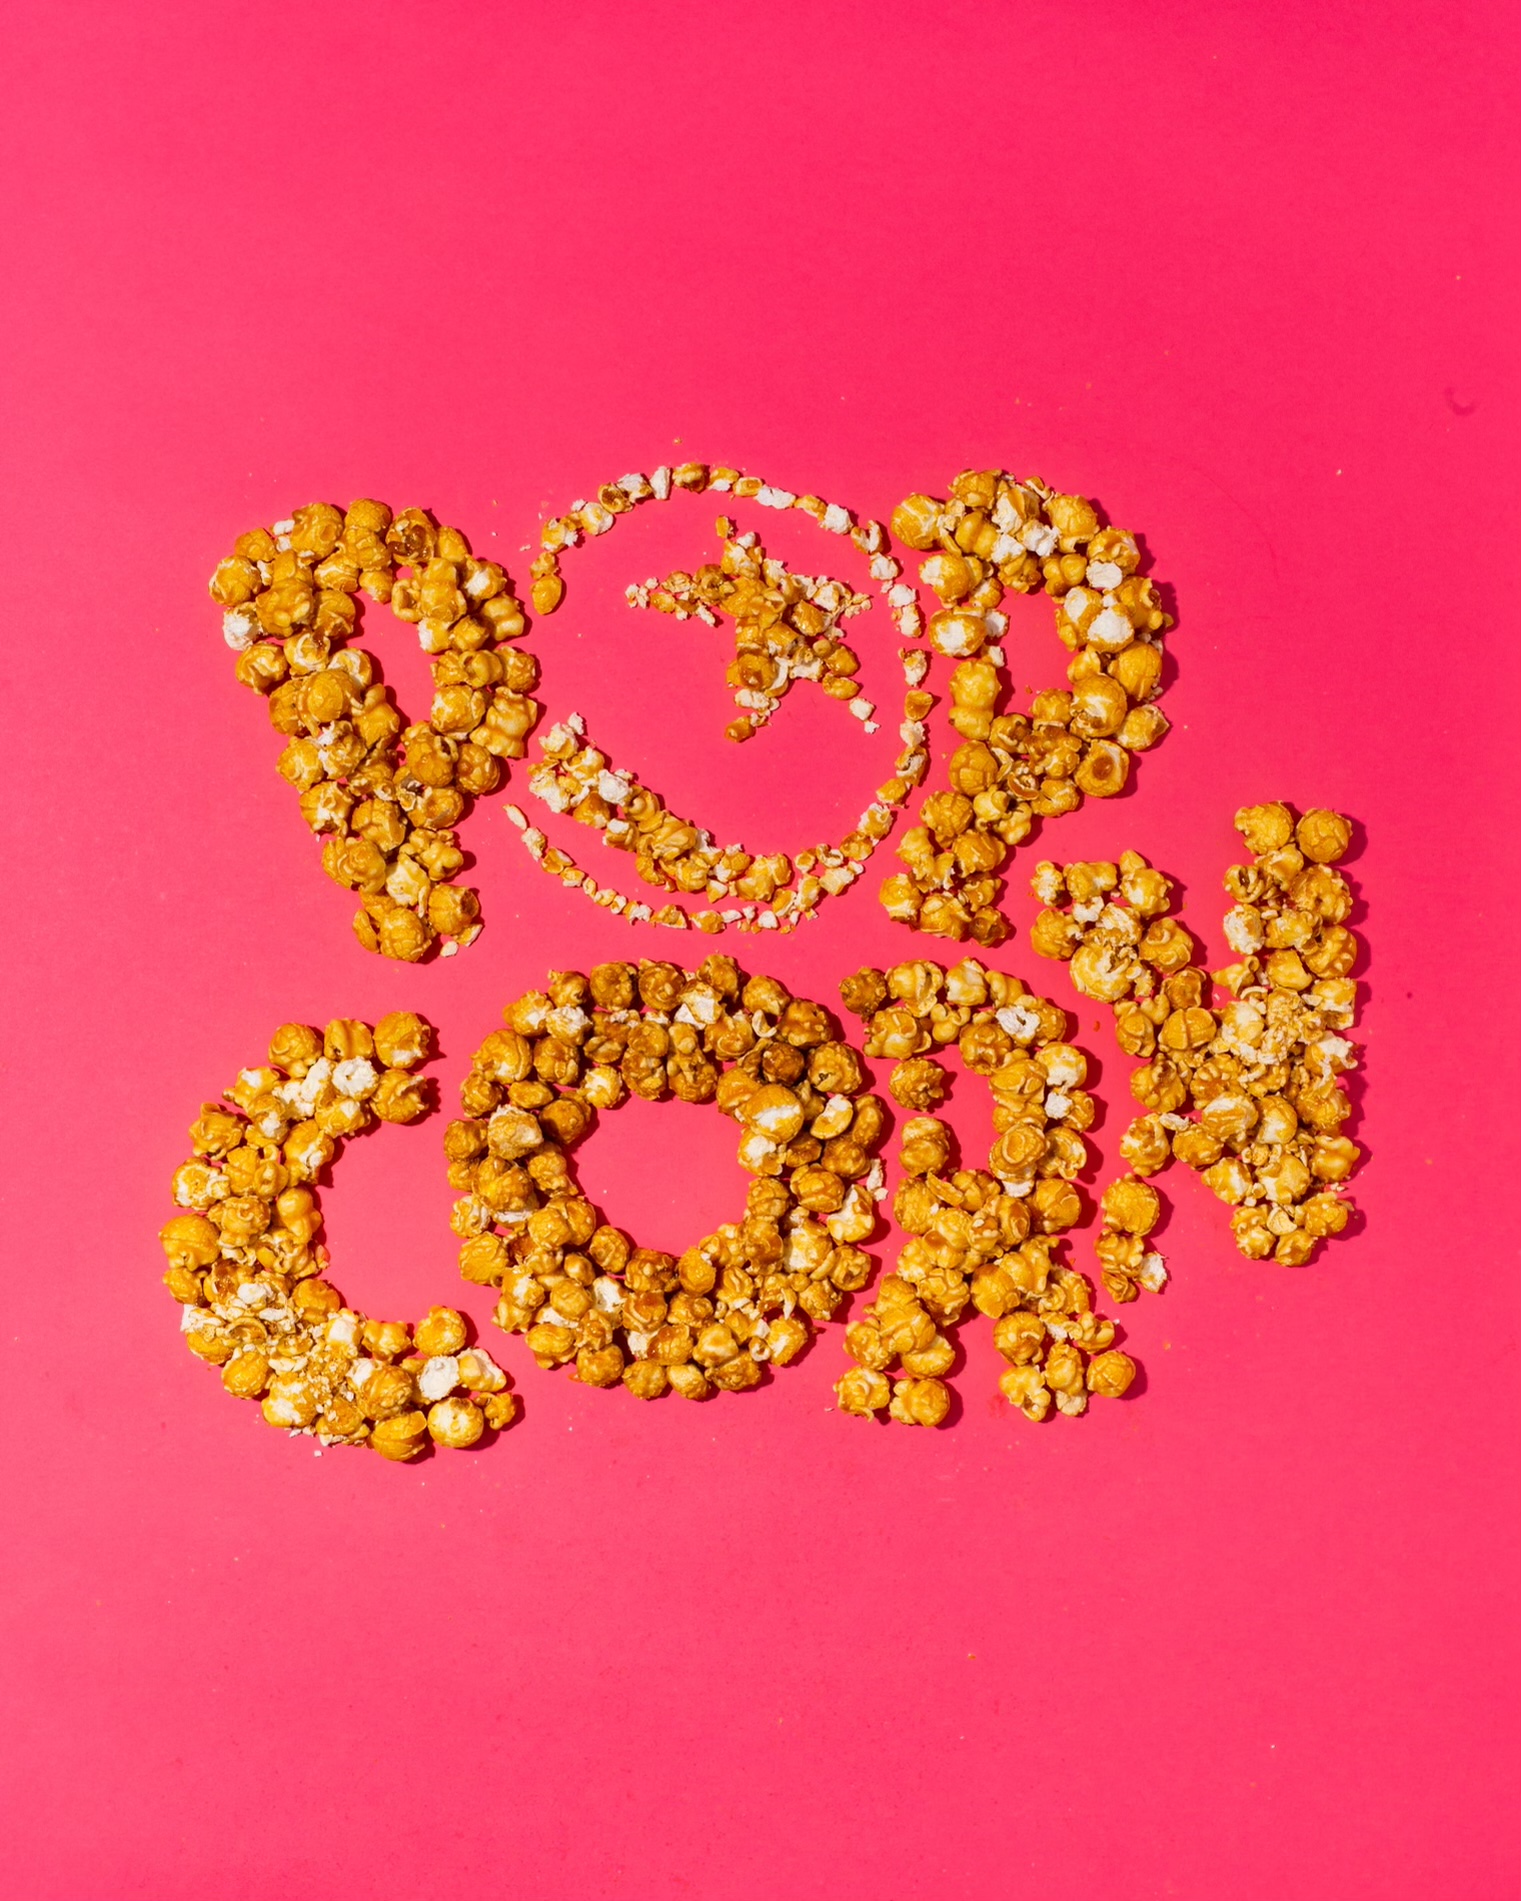 carmel corn laid out to create the pixar popcorn logo